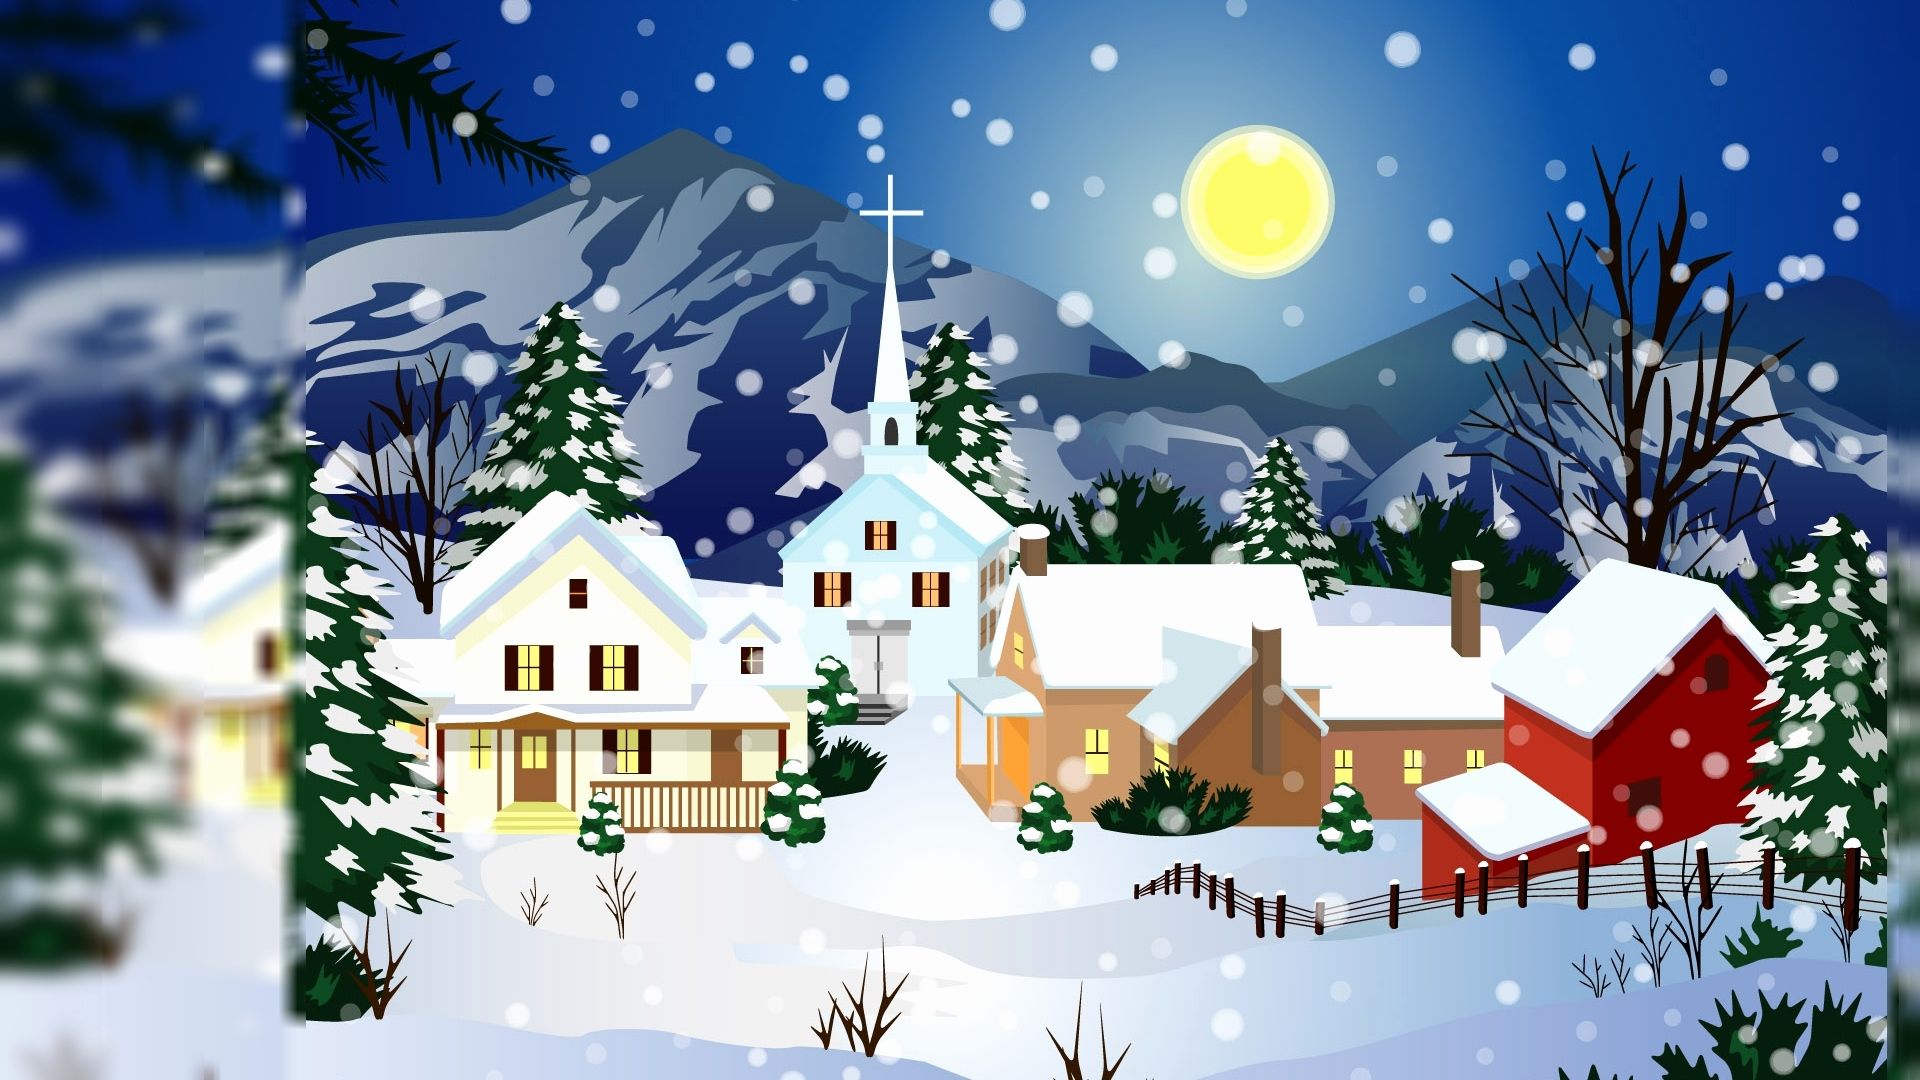 animated christmas desktop backgrounds hd